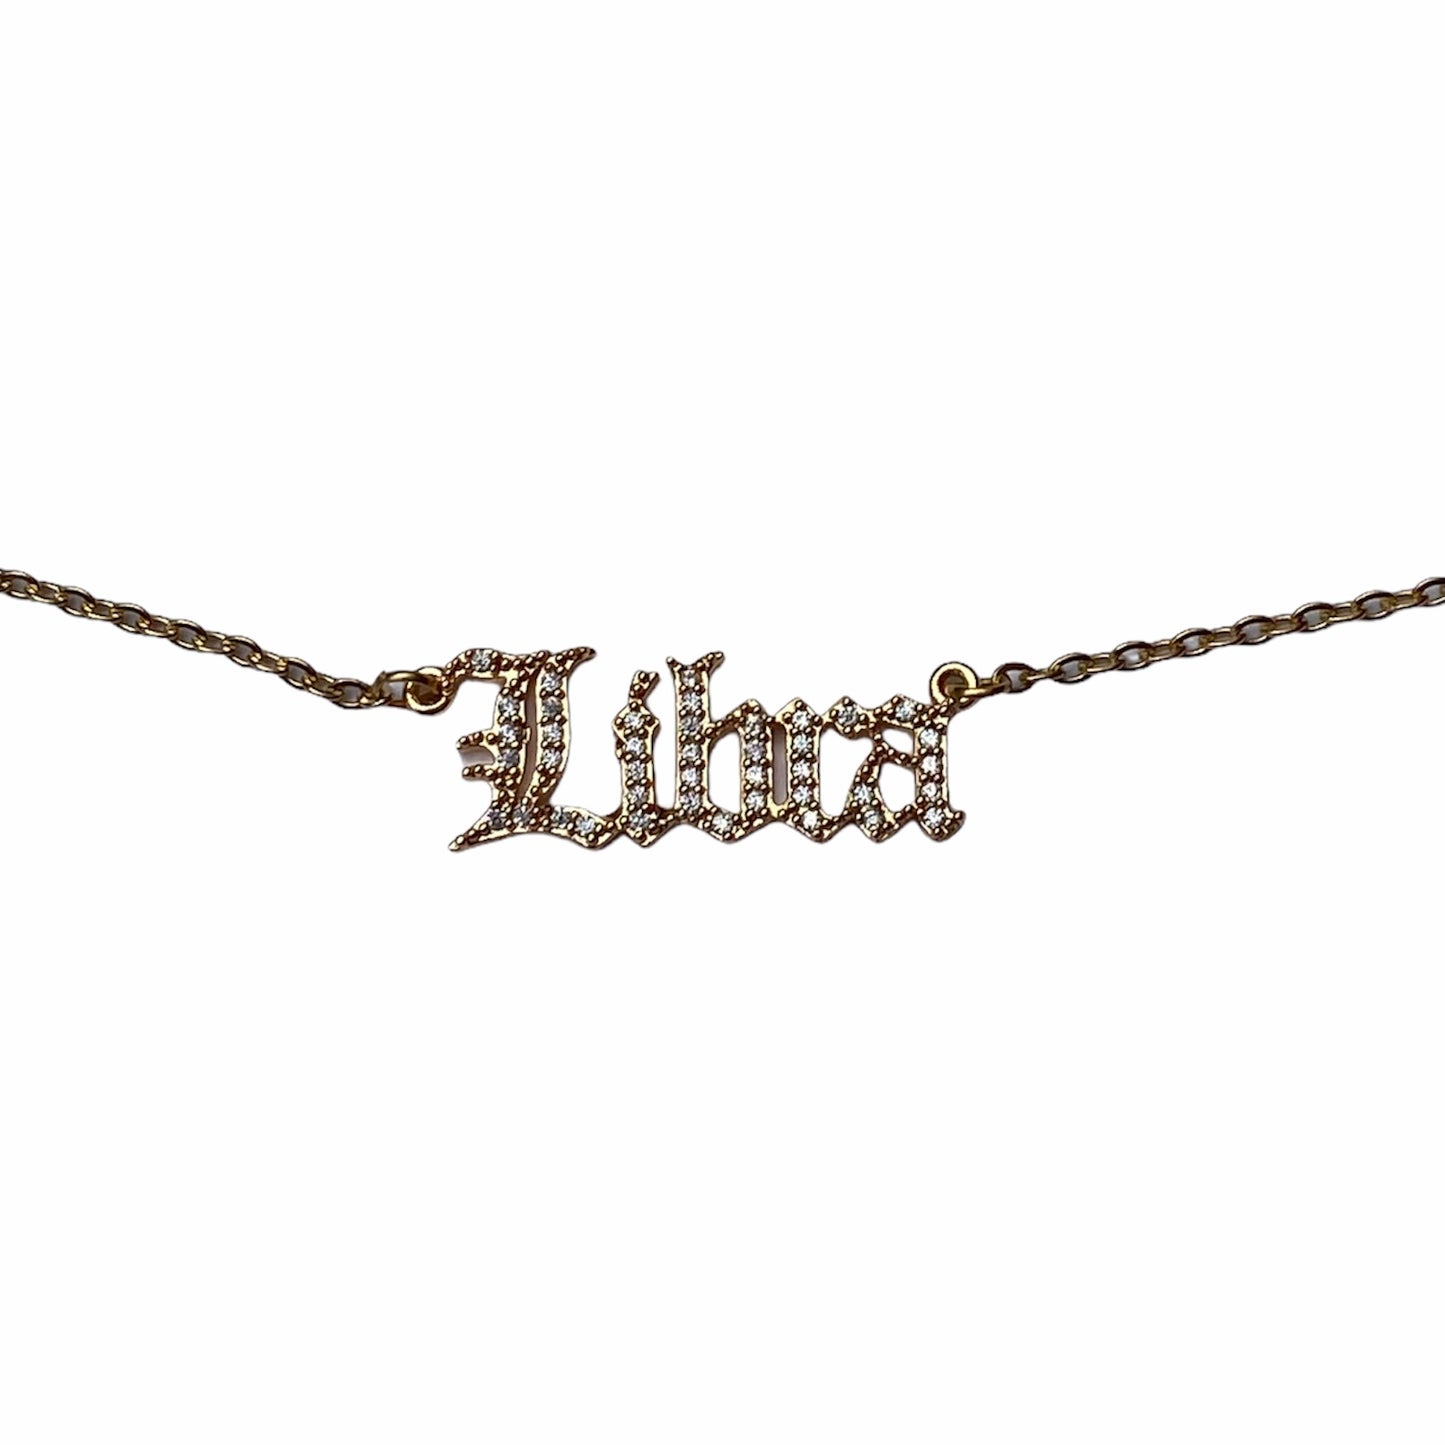 Libra Necklace